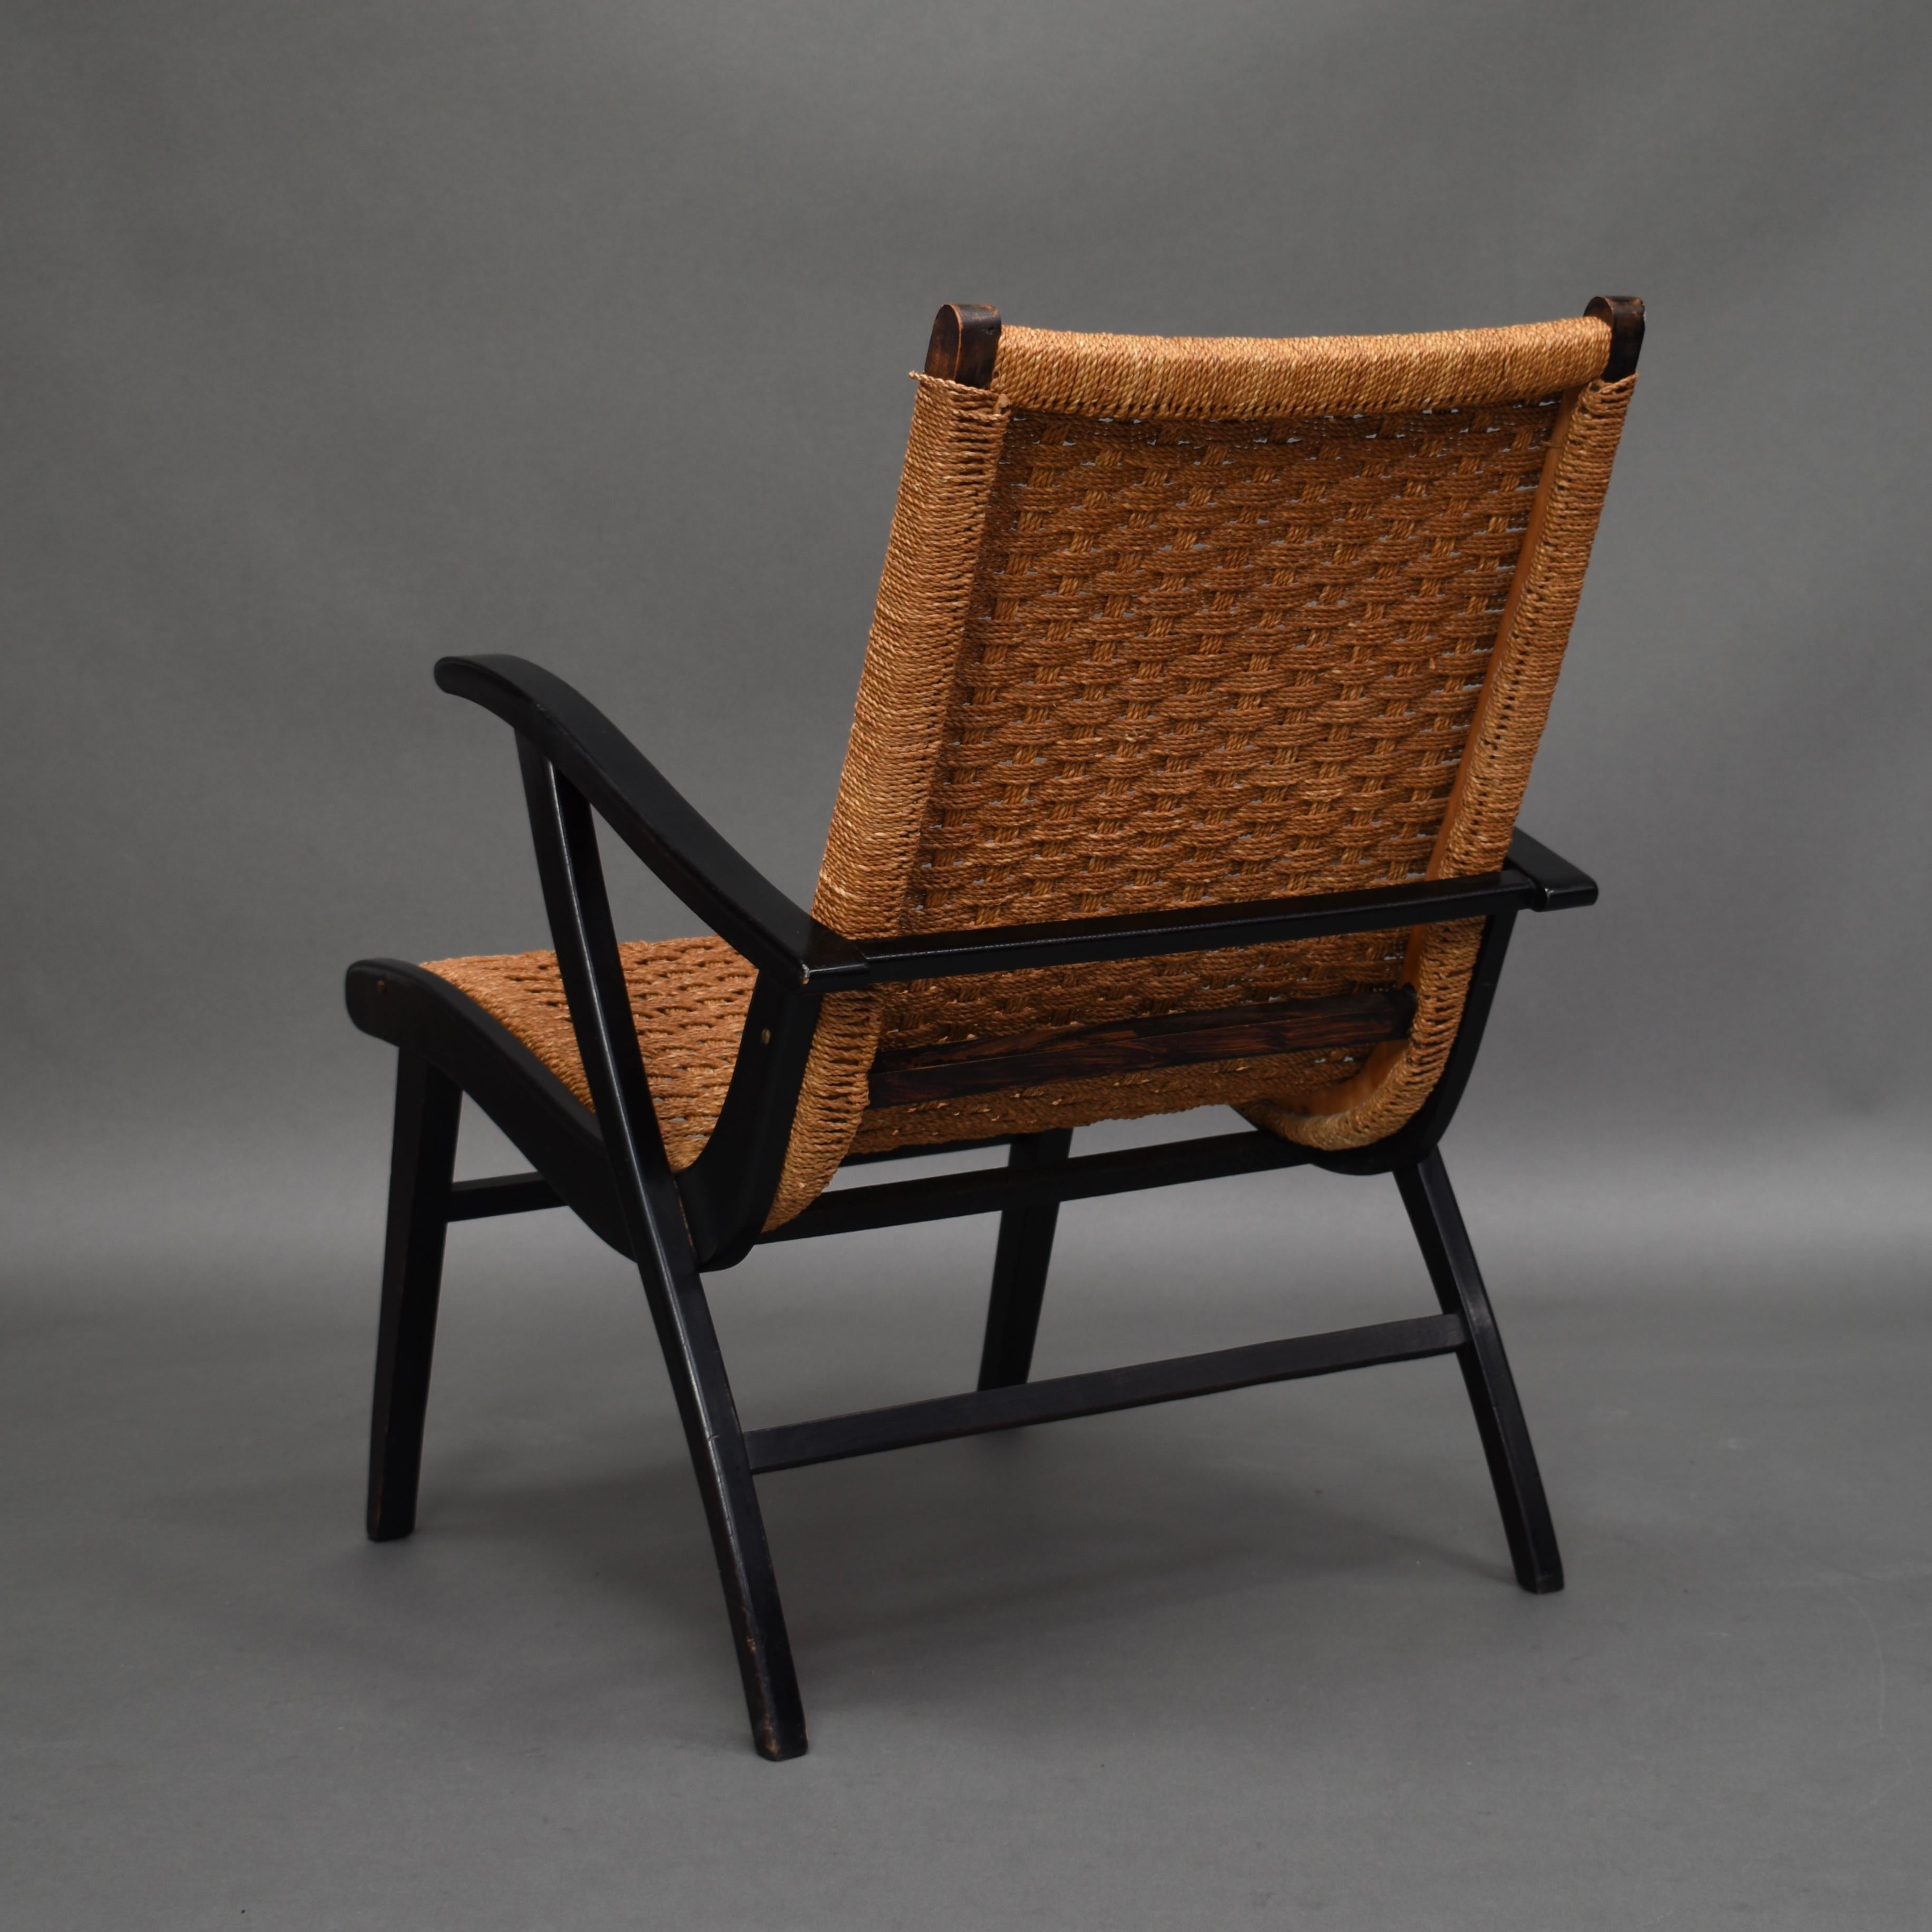 Scandinavian Modern Lounge Armchair in Papercord by Vroom & Dreesman, Netherlands, 1957